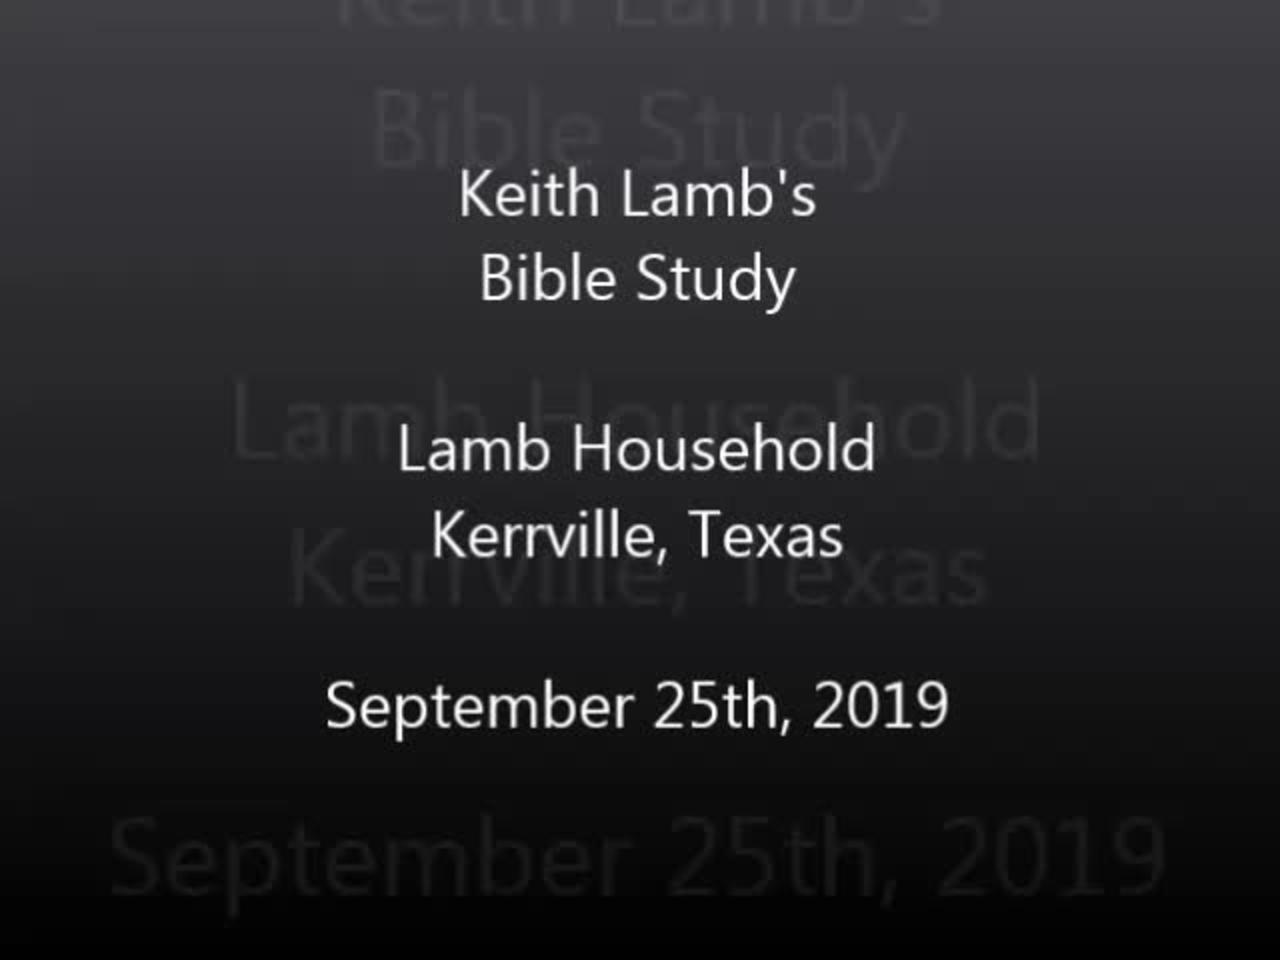 Bible Study at the Lamb's part 4